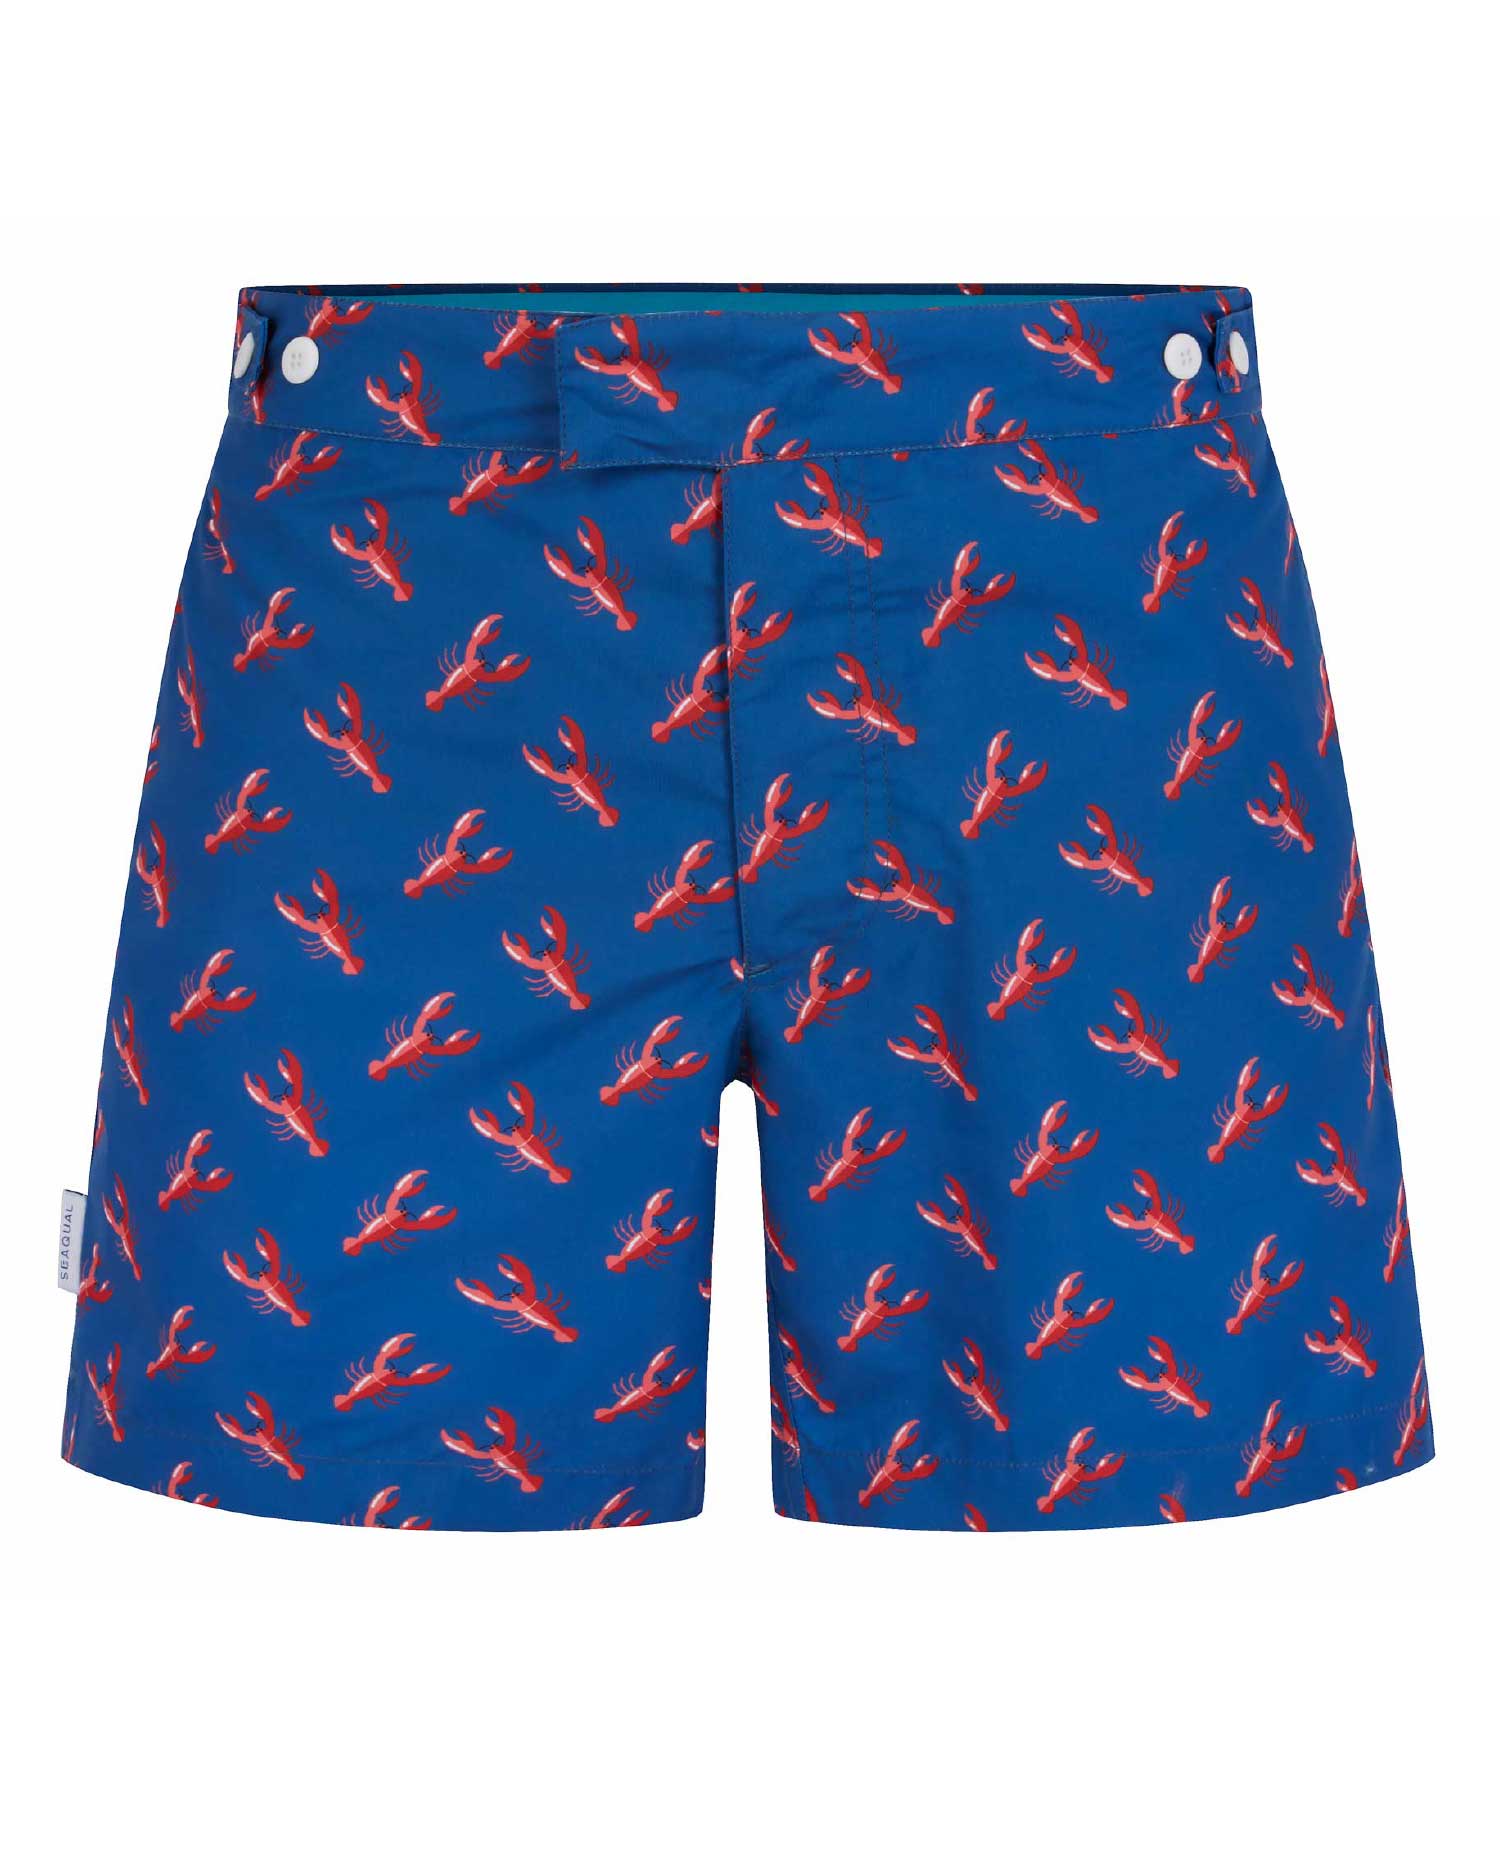 Blue Lobster Tailored Swim Shorts – Reef Knots